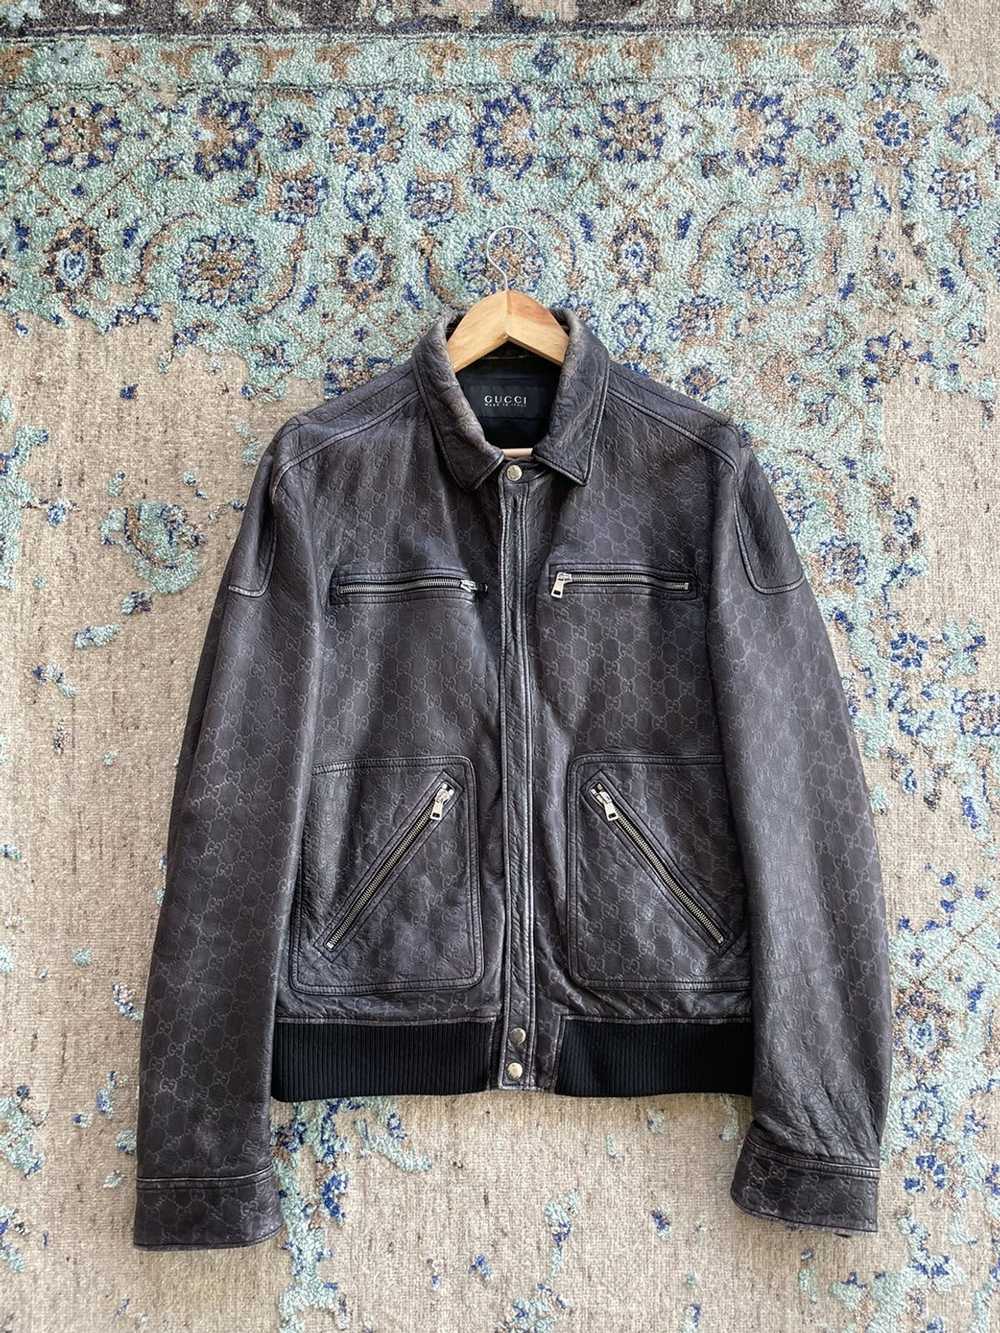 Gucci GG Monogram leather jacket - image 1